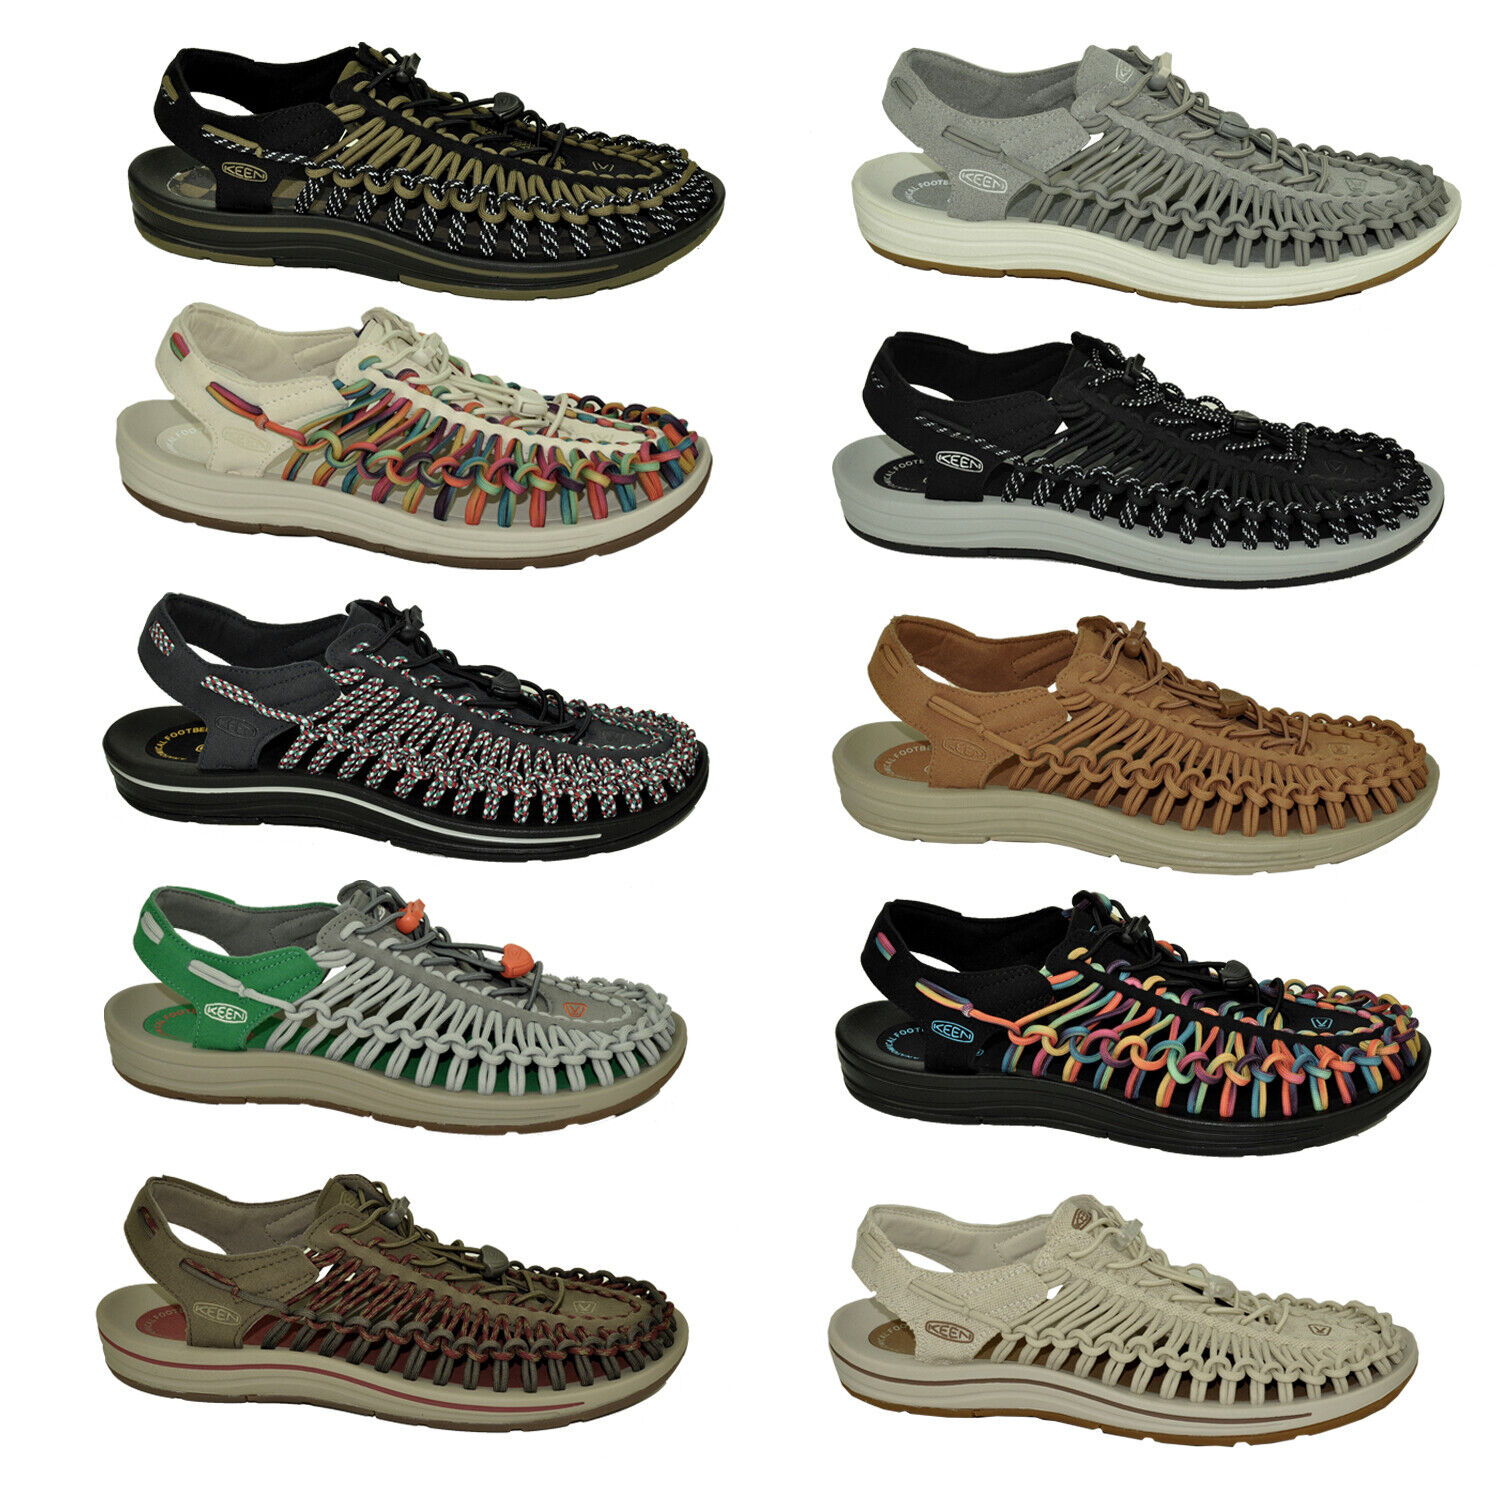 KEEN Uneek Sandalen Trekkingsandalen Ultra Leicht Leder Canvas Herren Sneaker Modell - Farbe 1026338 - Schwarz/Olive Schuhgröße EUR 41 - UK 7,5 - US 8,5